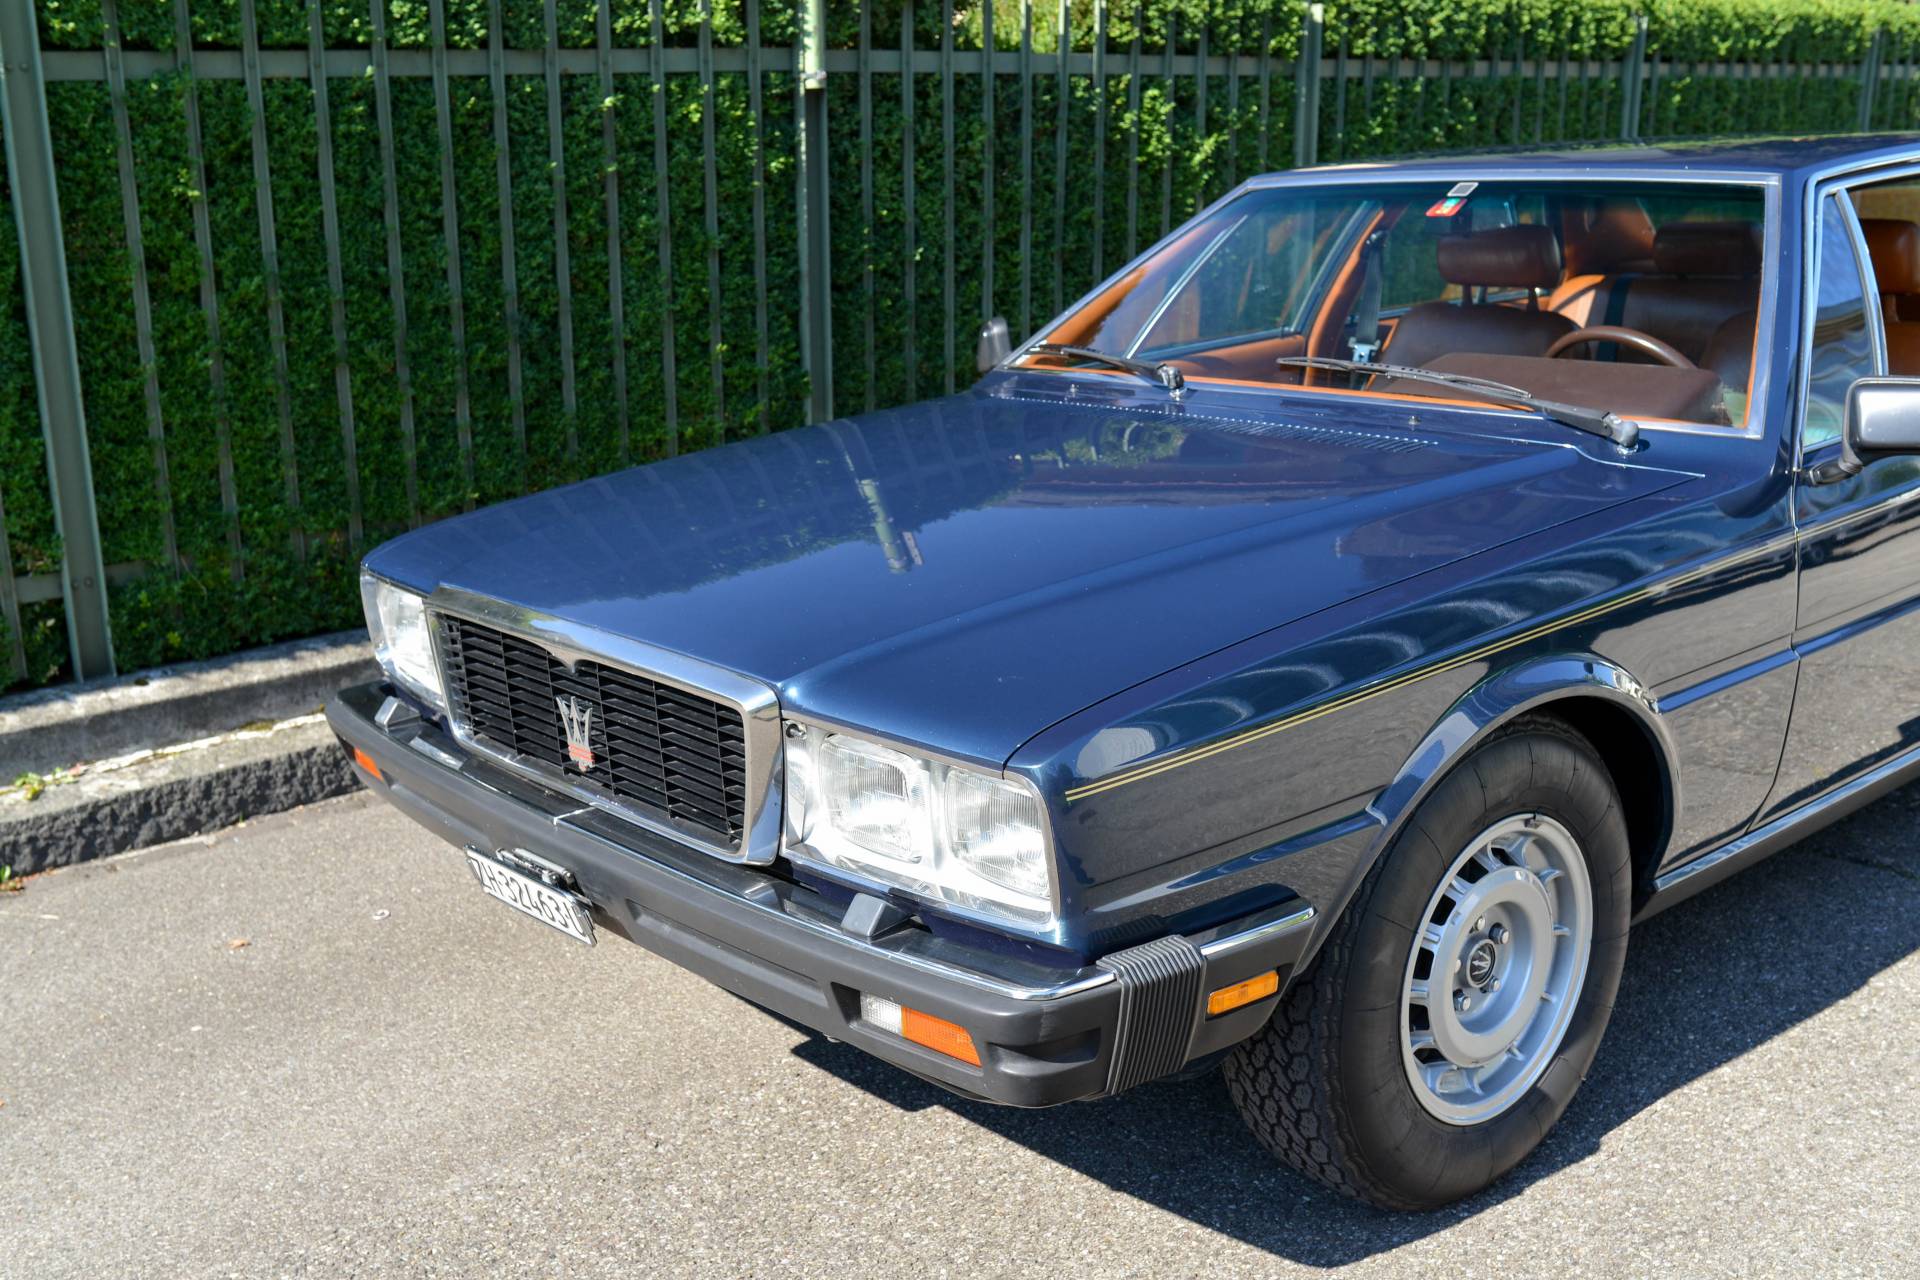 For Sale: Maserati Quattroporte 4900 (1984) offered for ...